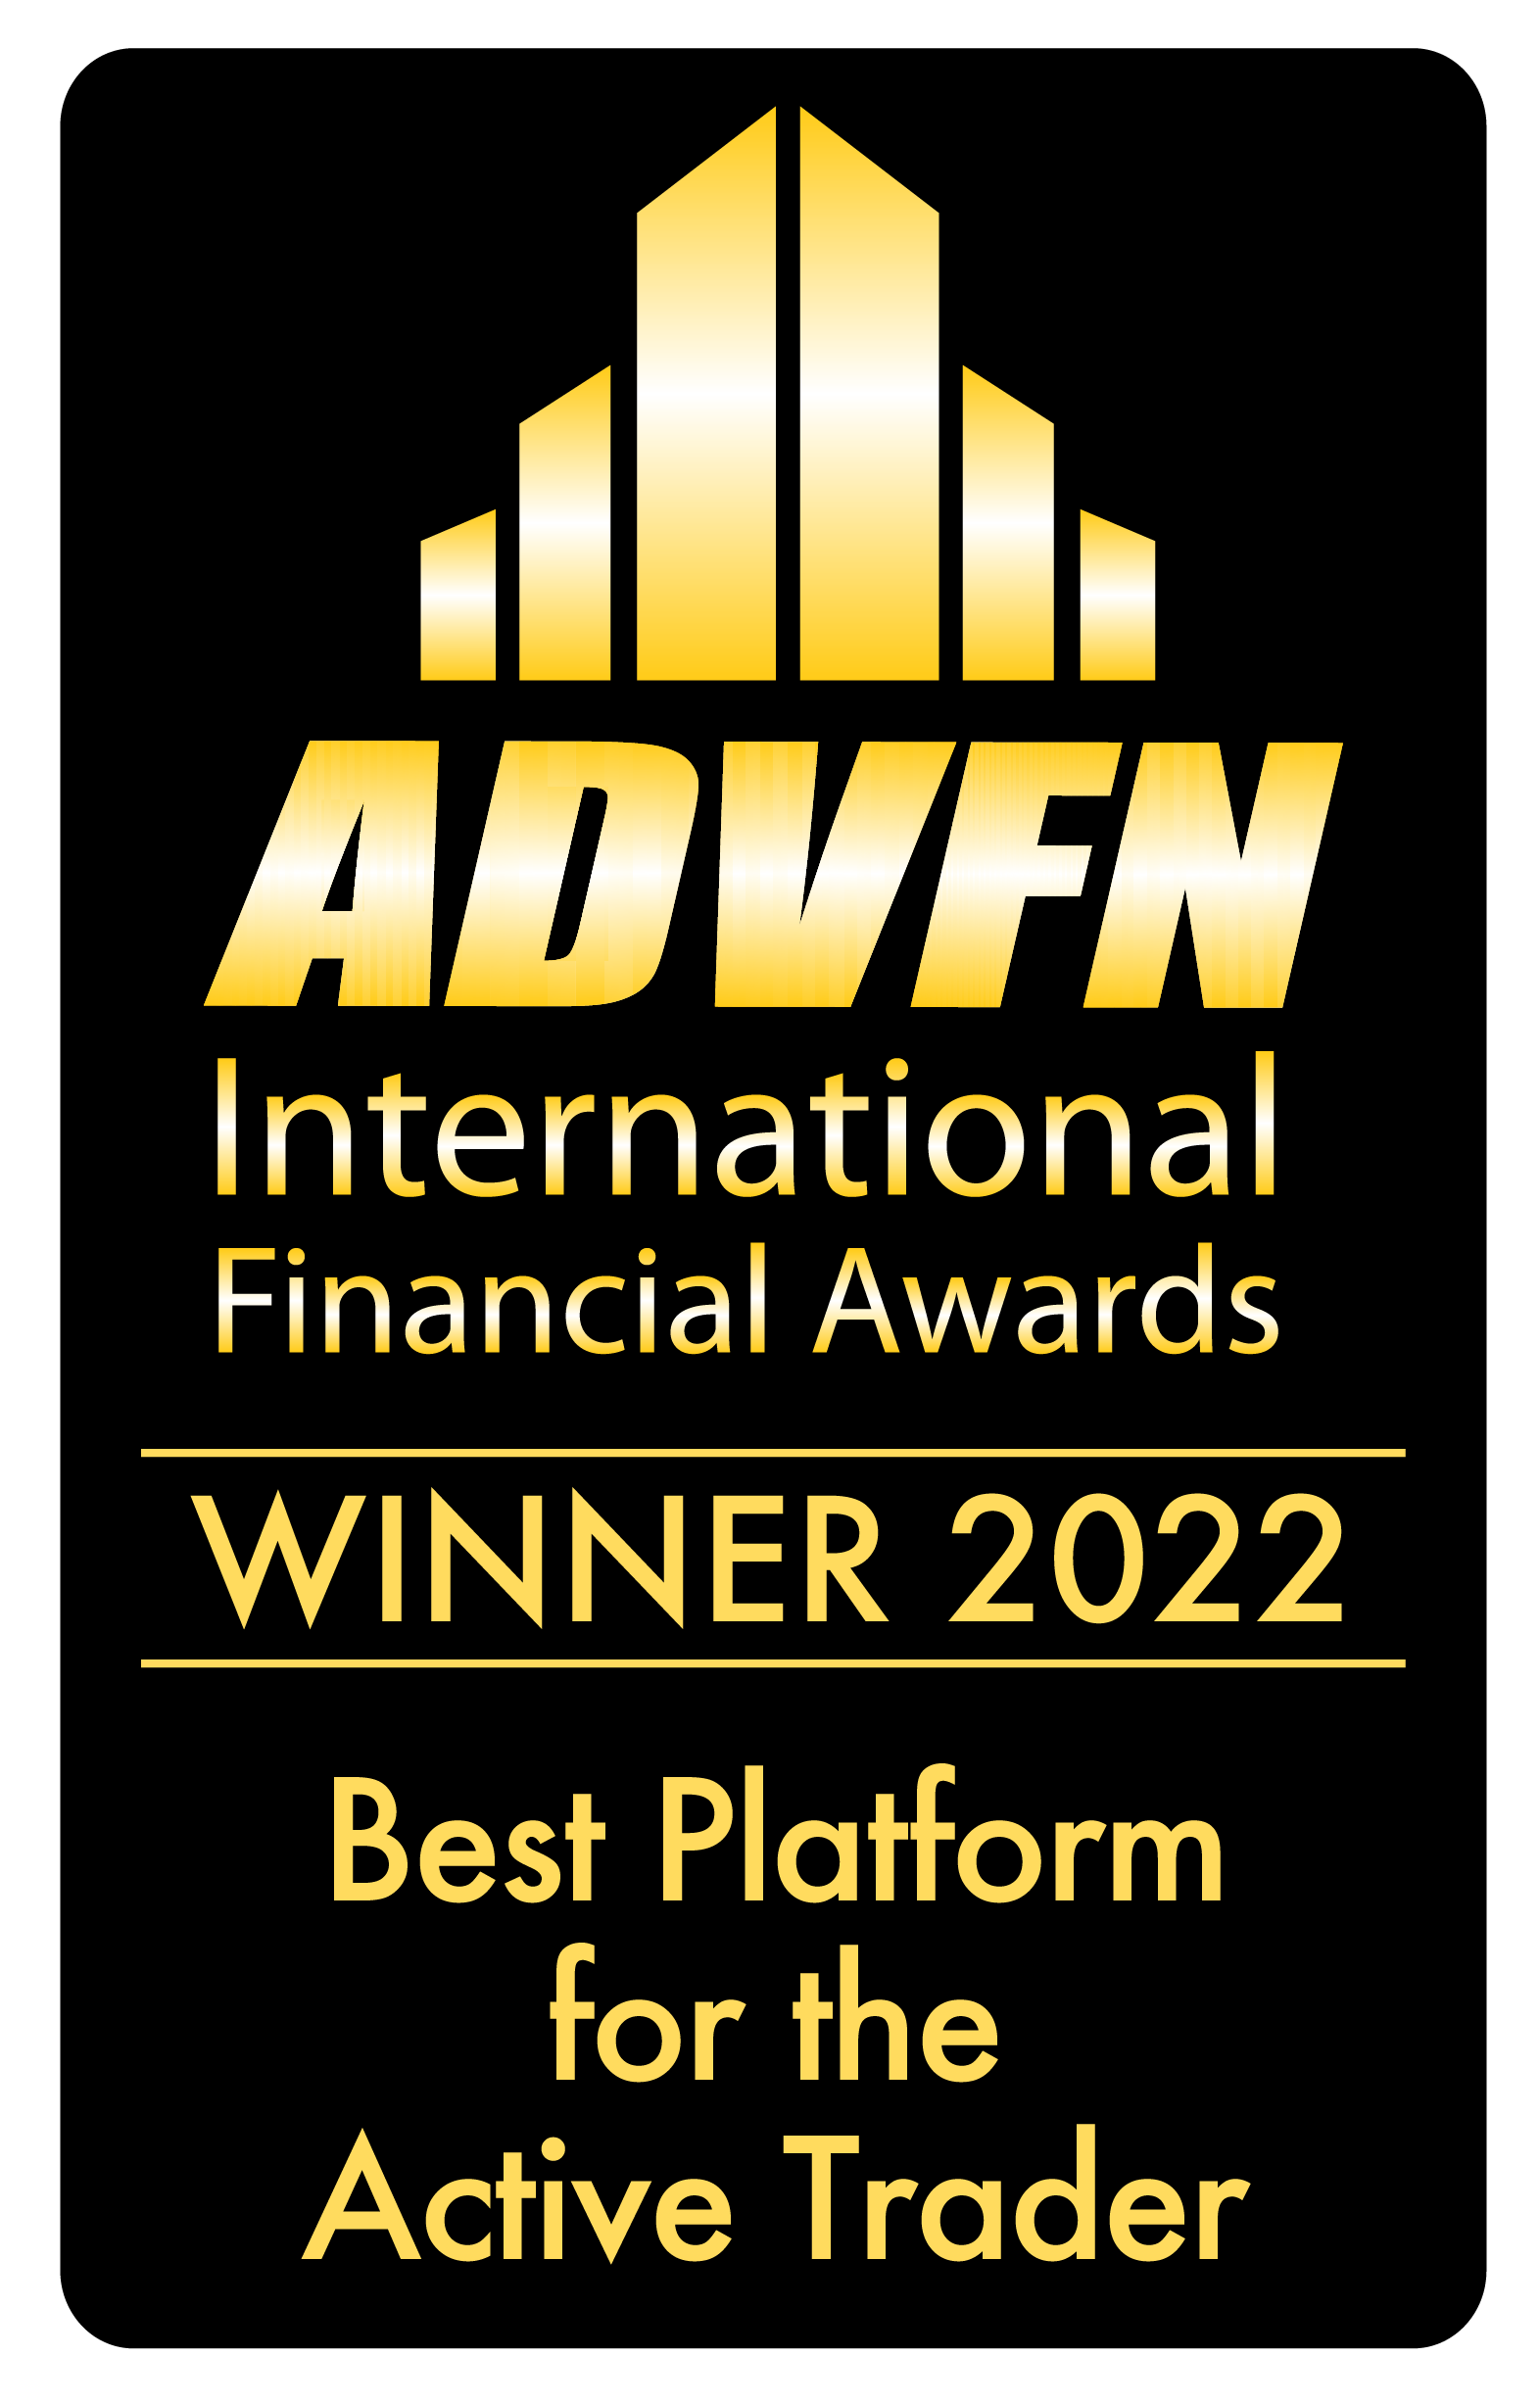 Best Platform for the Active Trader by ADVFN International Financial Awards